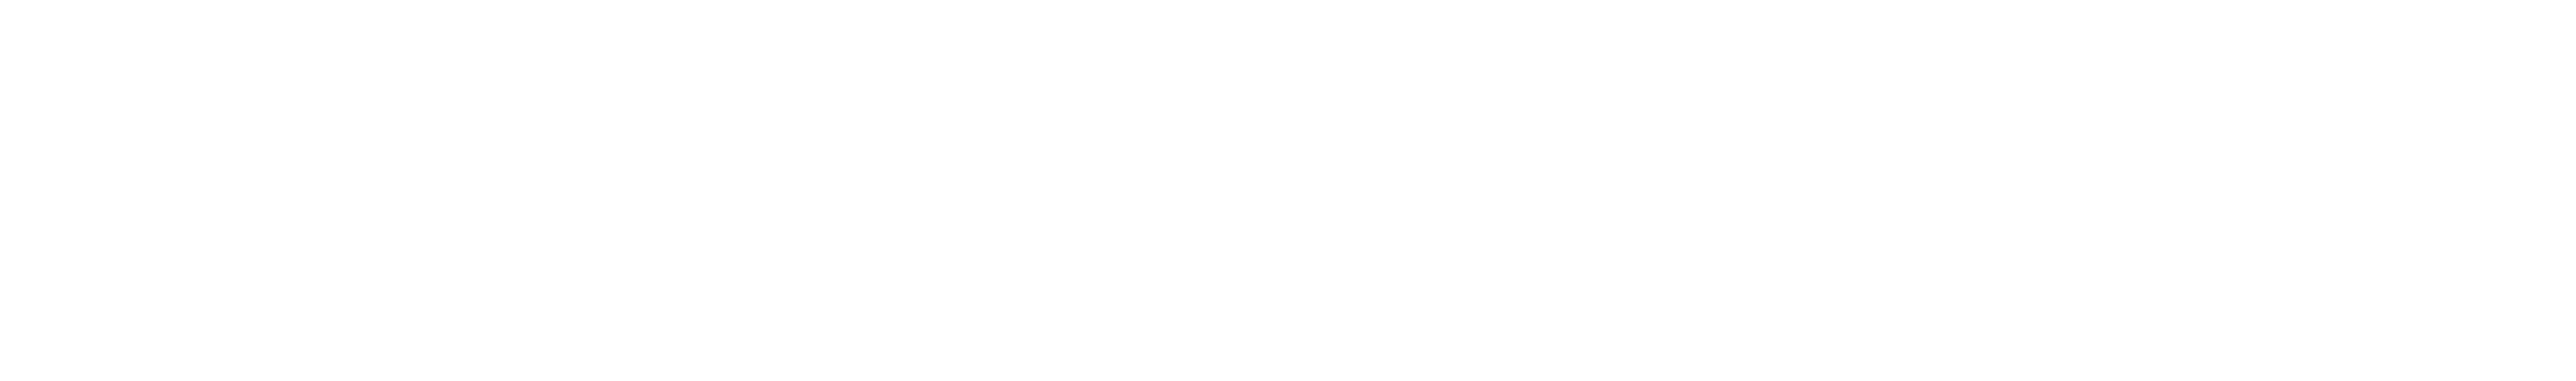 UF College of Education logo